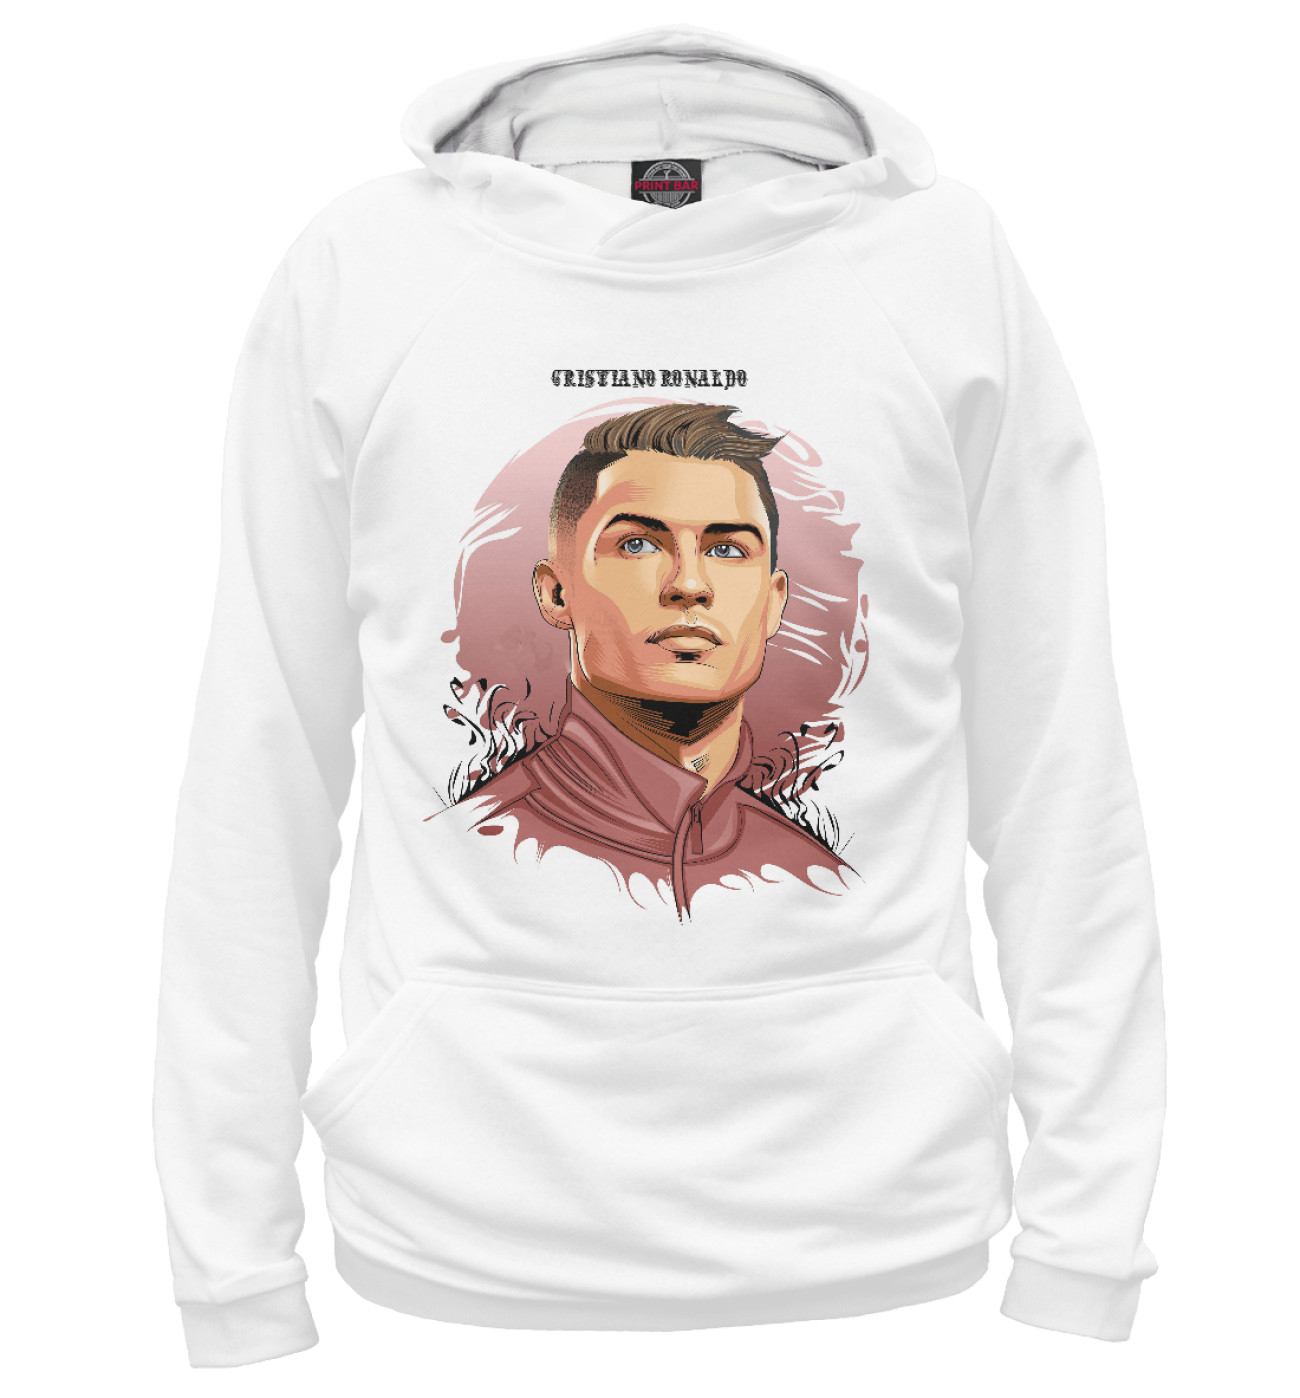 Мужское Худи Cristiano Ronaldo, артикул: FLT-876531-hud-2